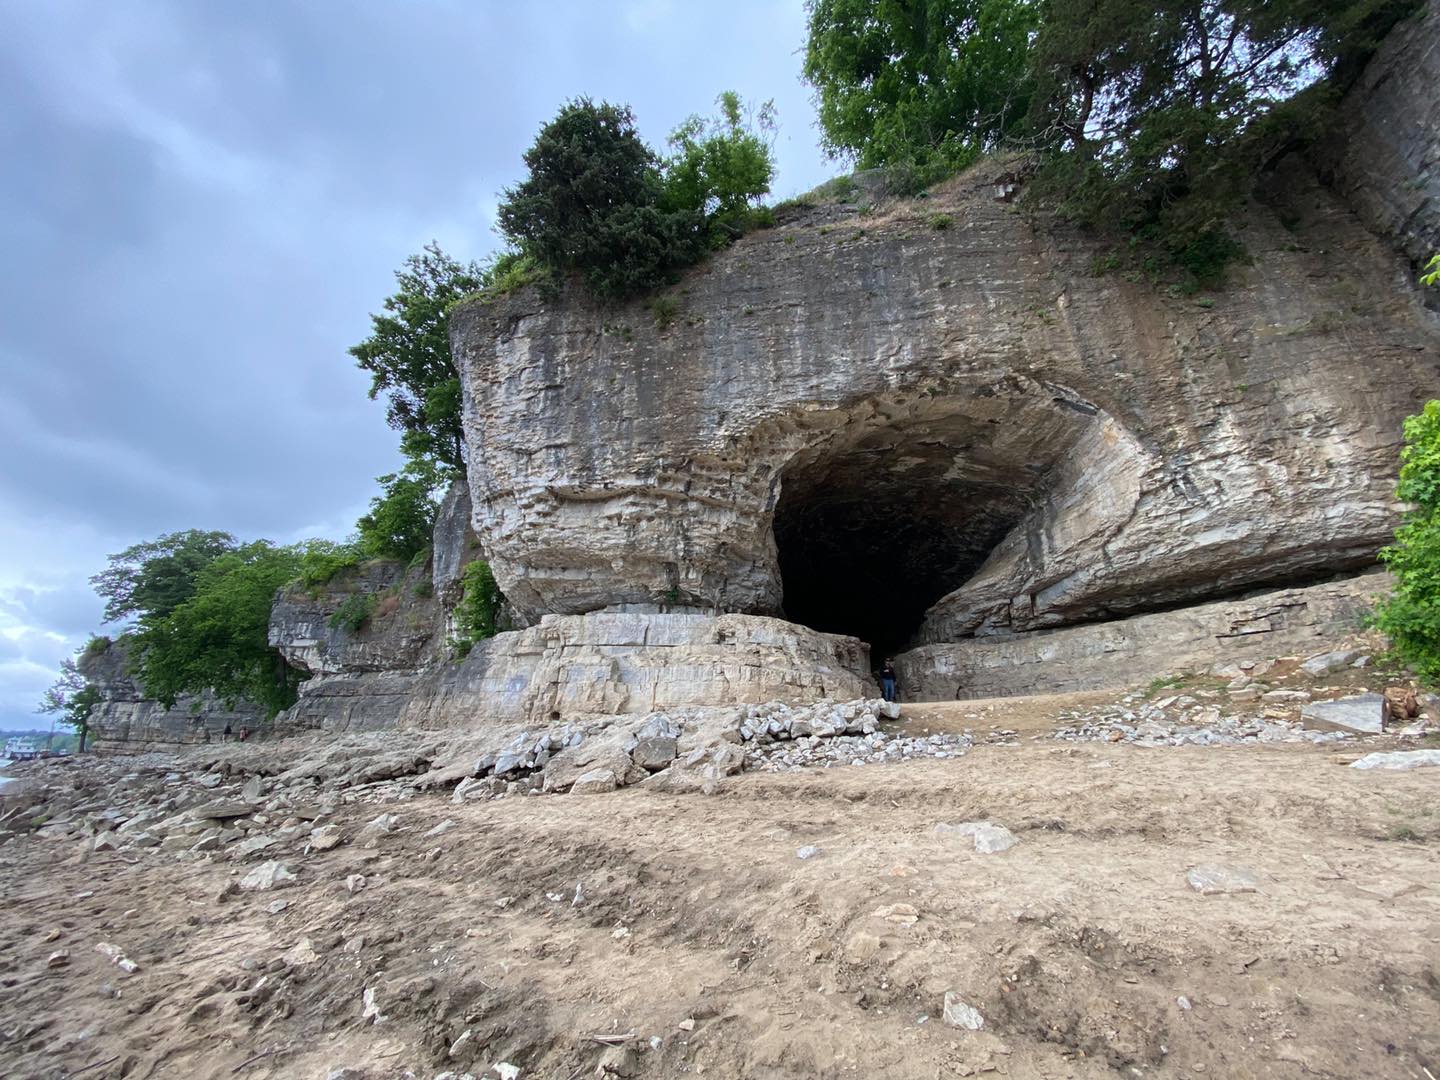 Cave in Rock Trail